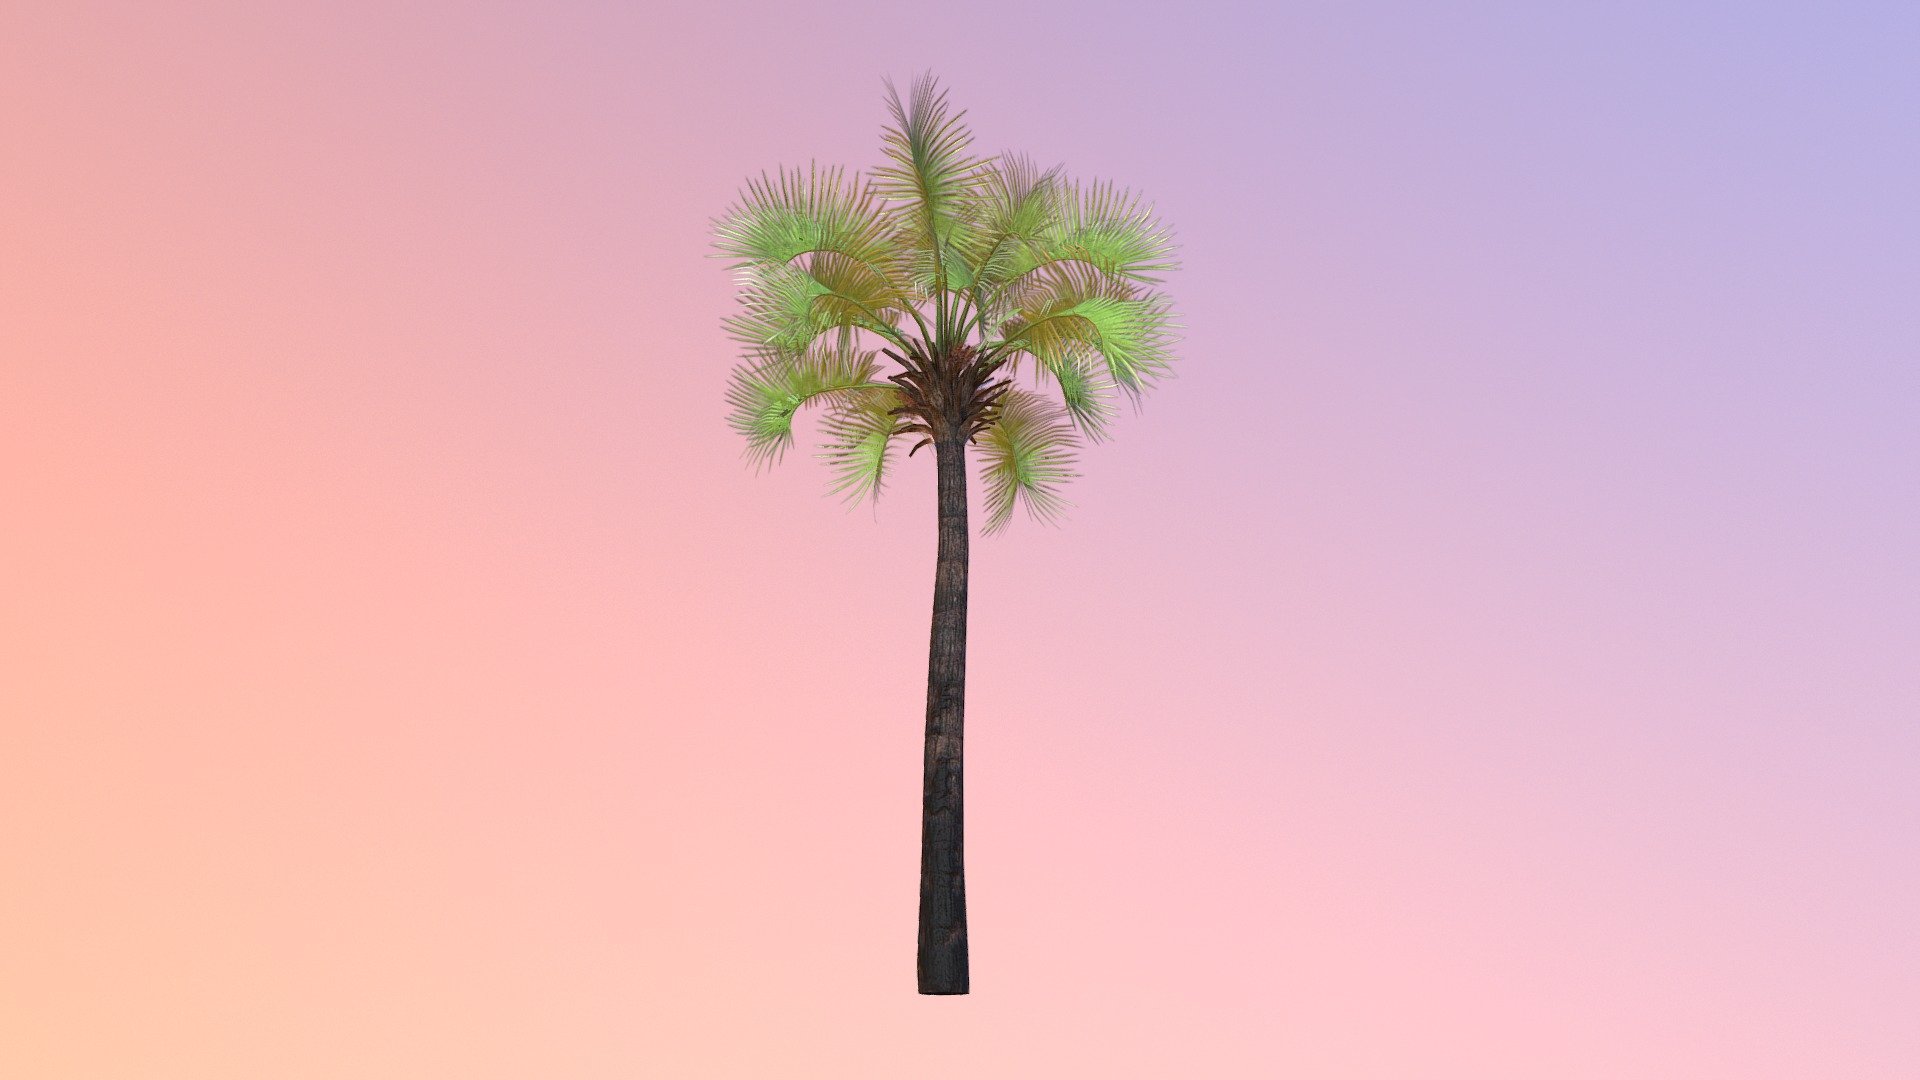 Sabal palm (Sabal palmetto) DRAFT